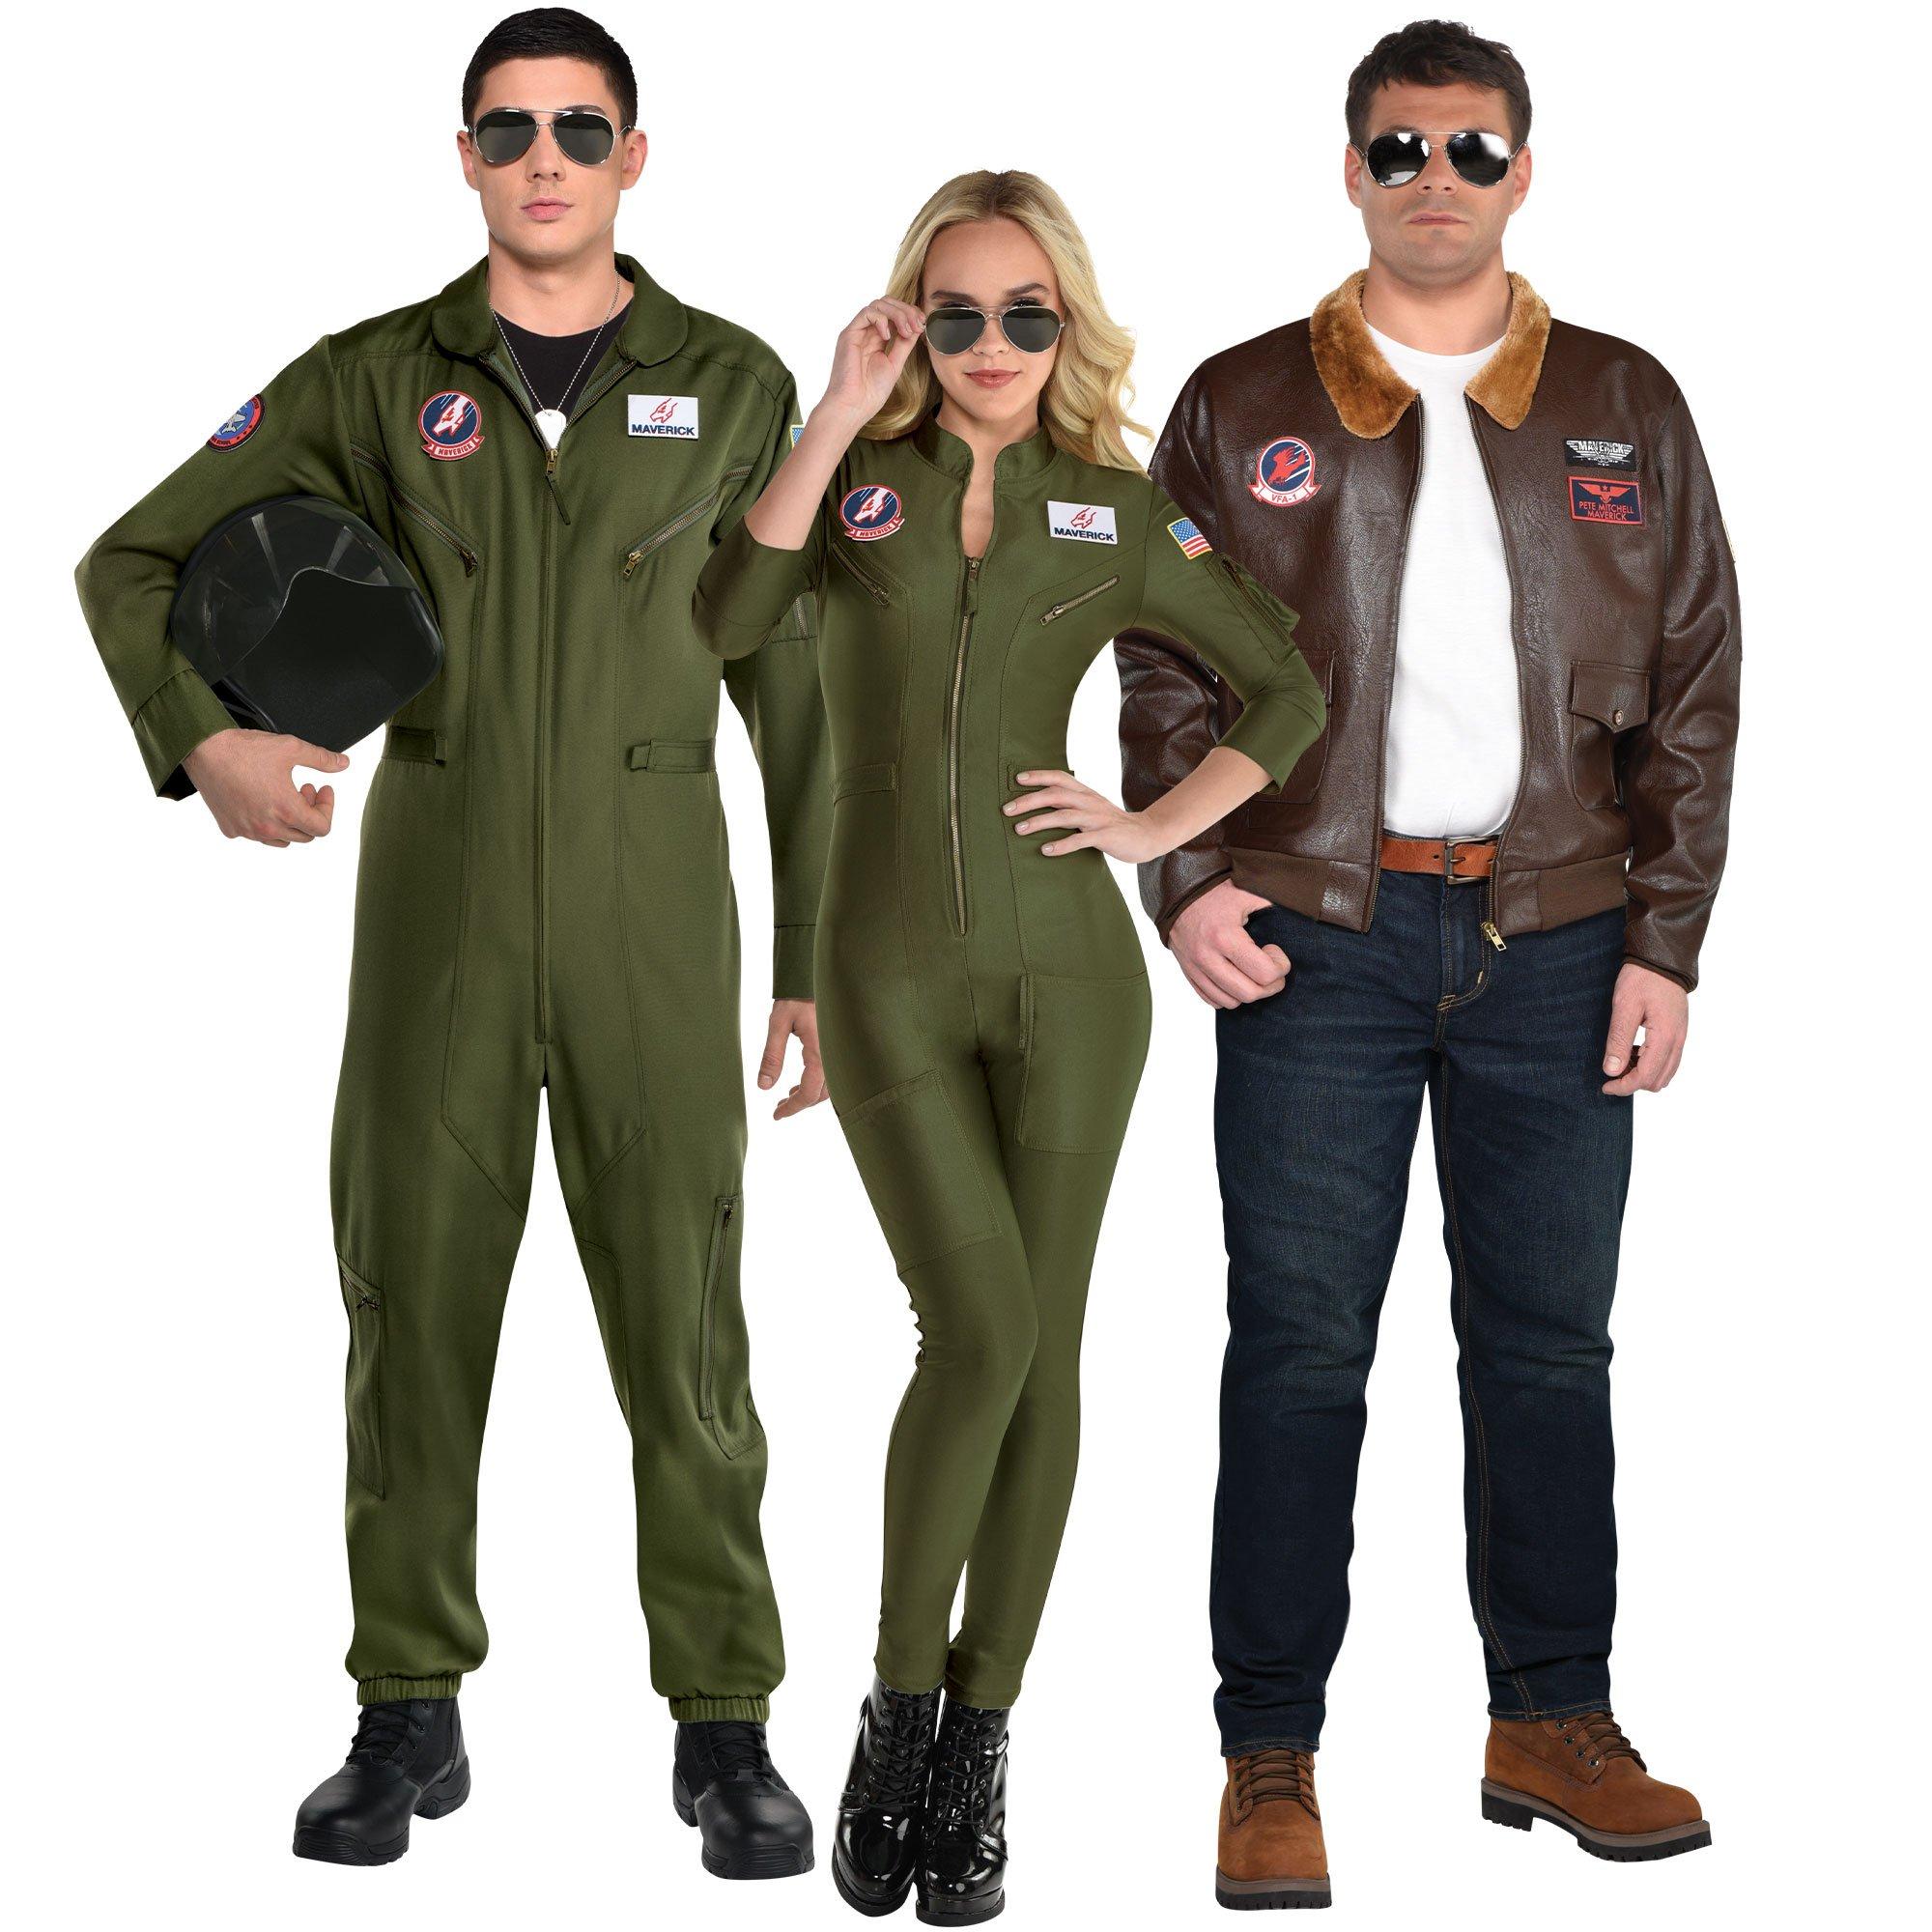 Top Gun Family Halloween Costumes